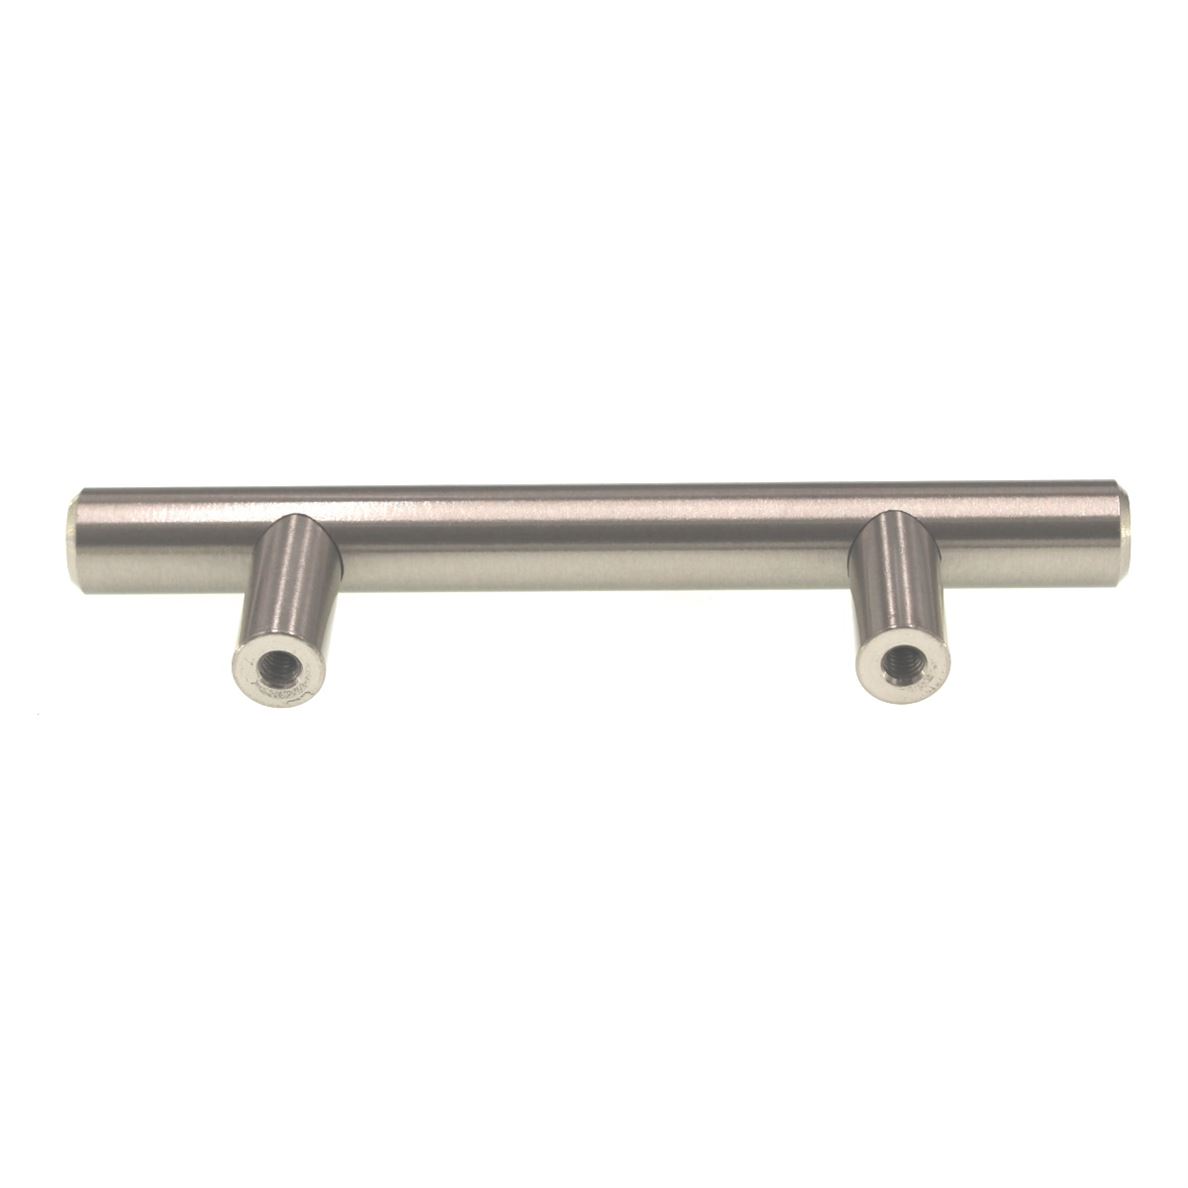 Brainerd Bar Pulls 21 7/16" (544mm) Ctr Bar Pull Stainless Steel P02123-SS